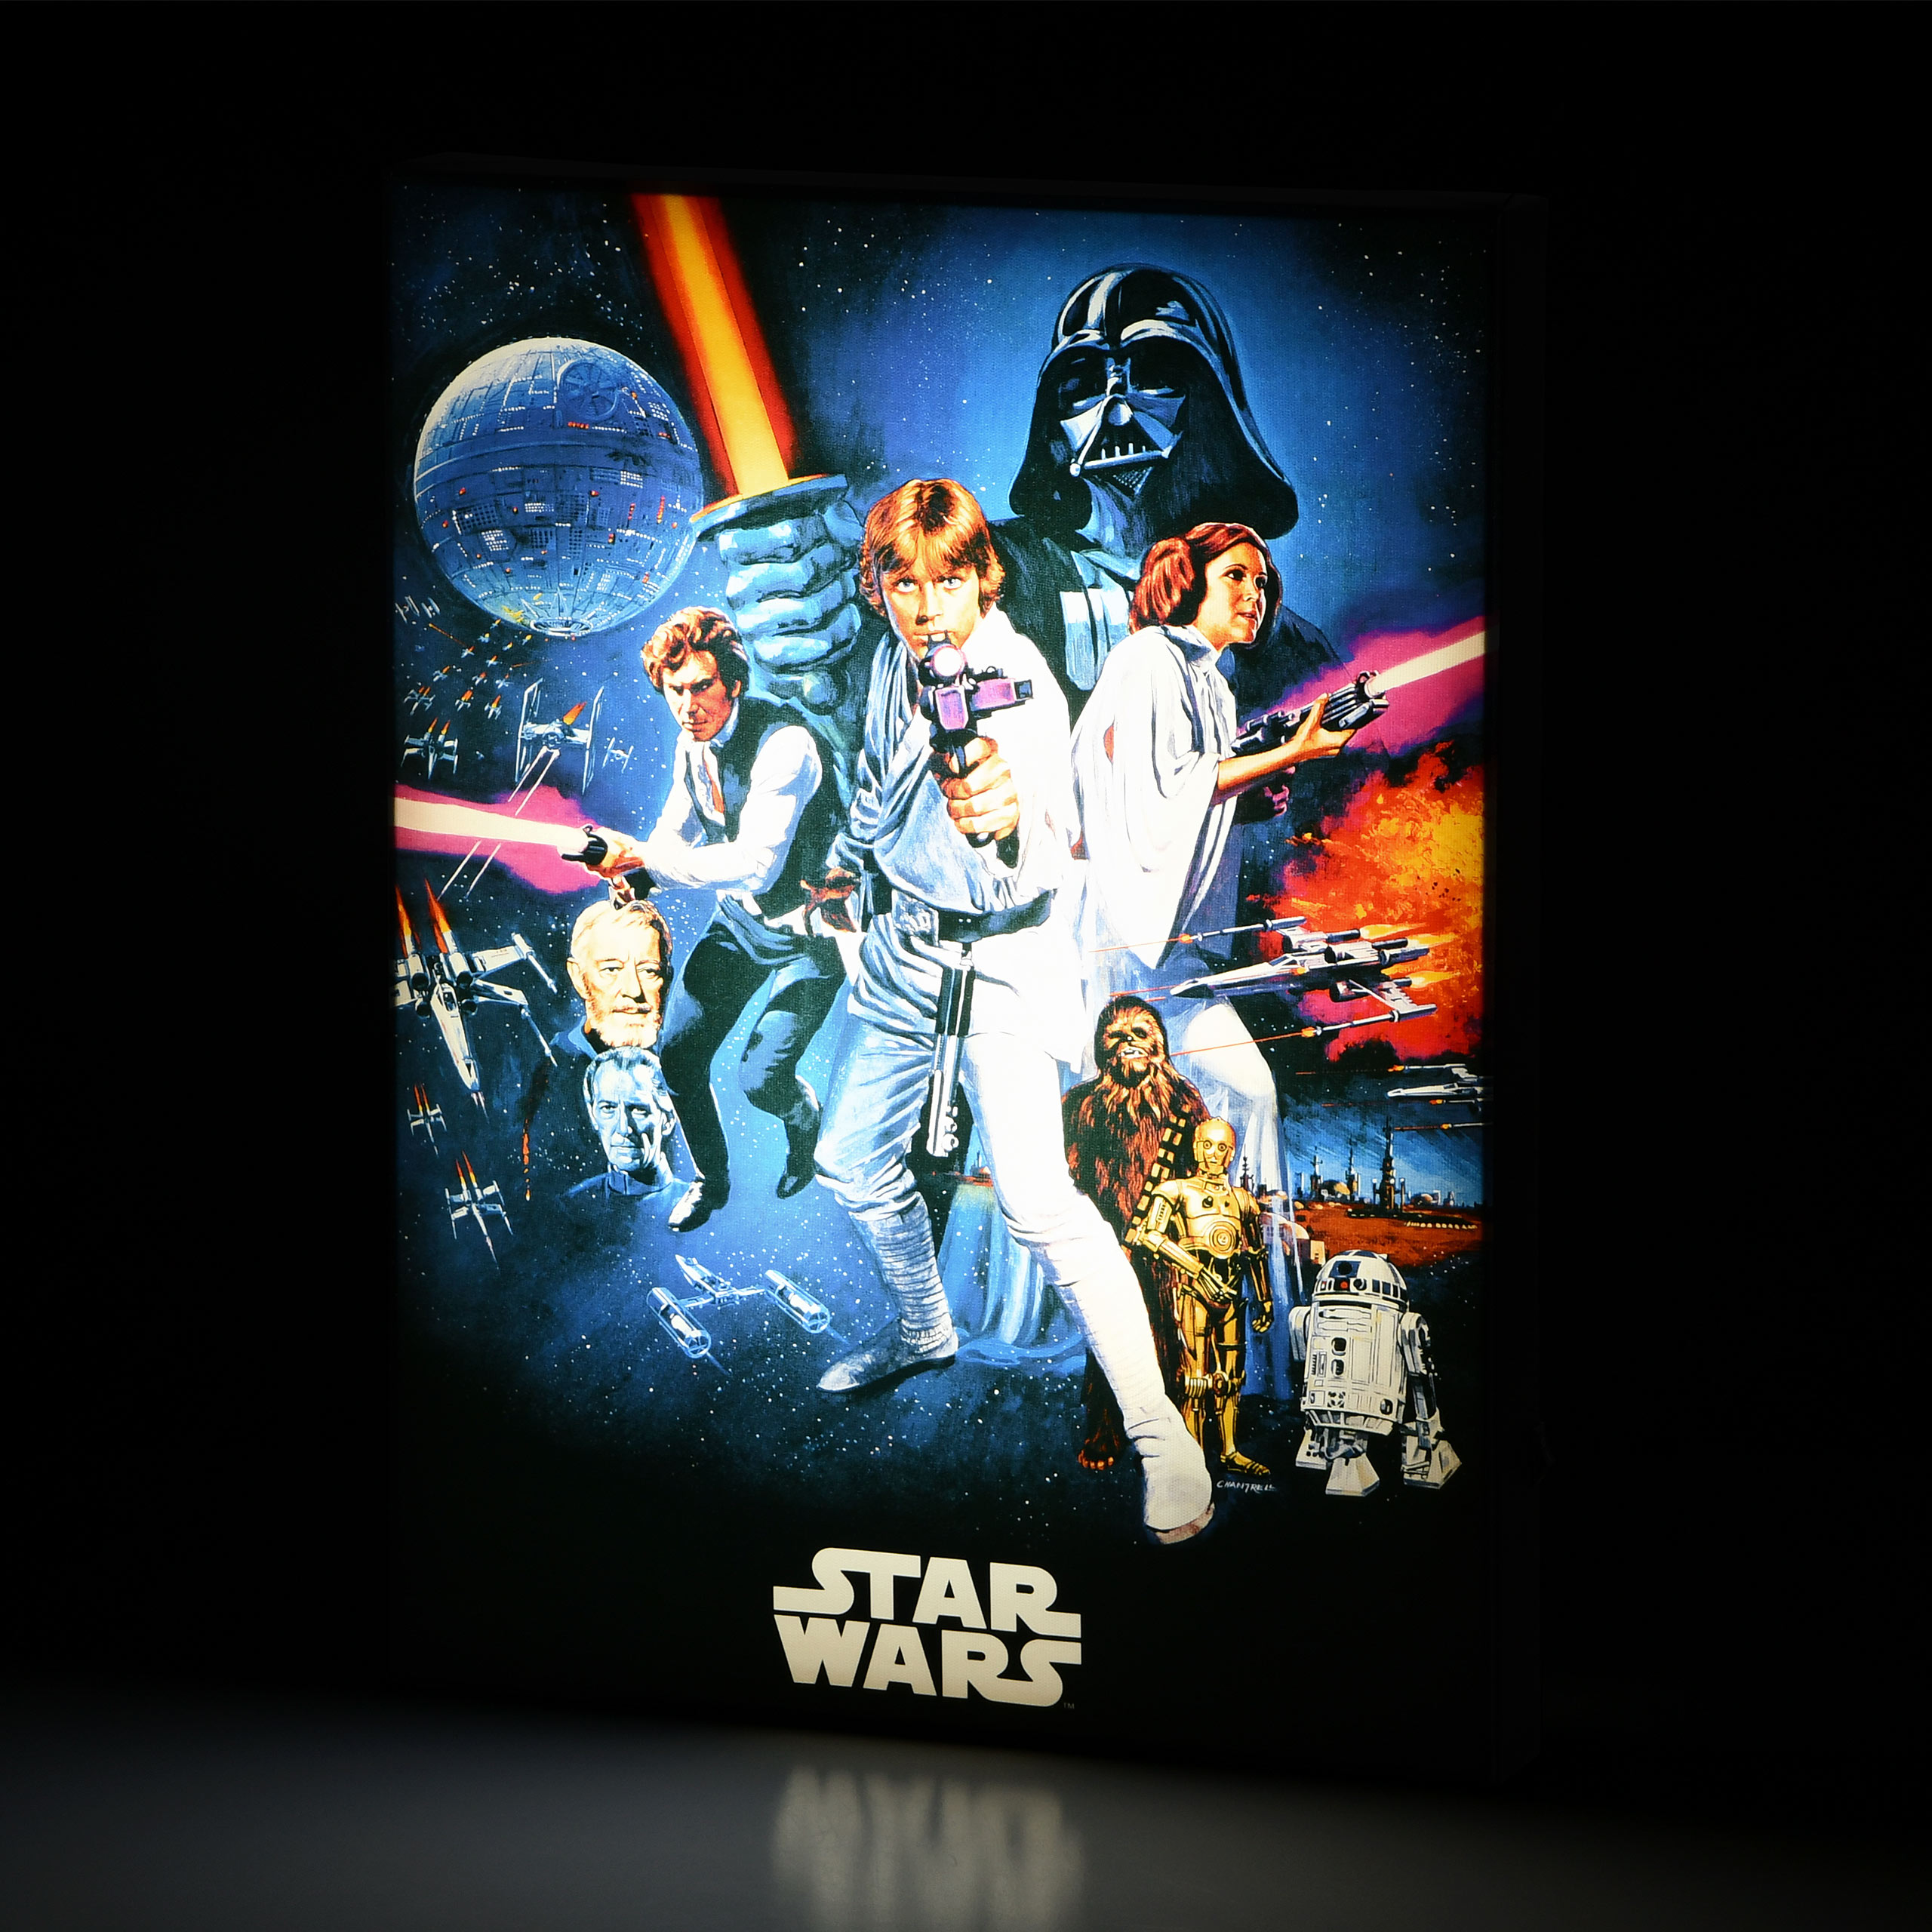 Star Wars - A New Hope Tableau mural avec lumière